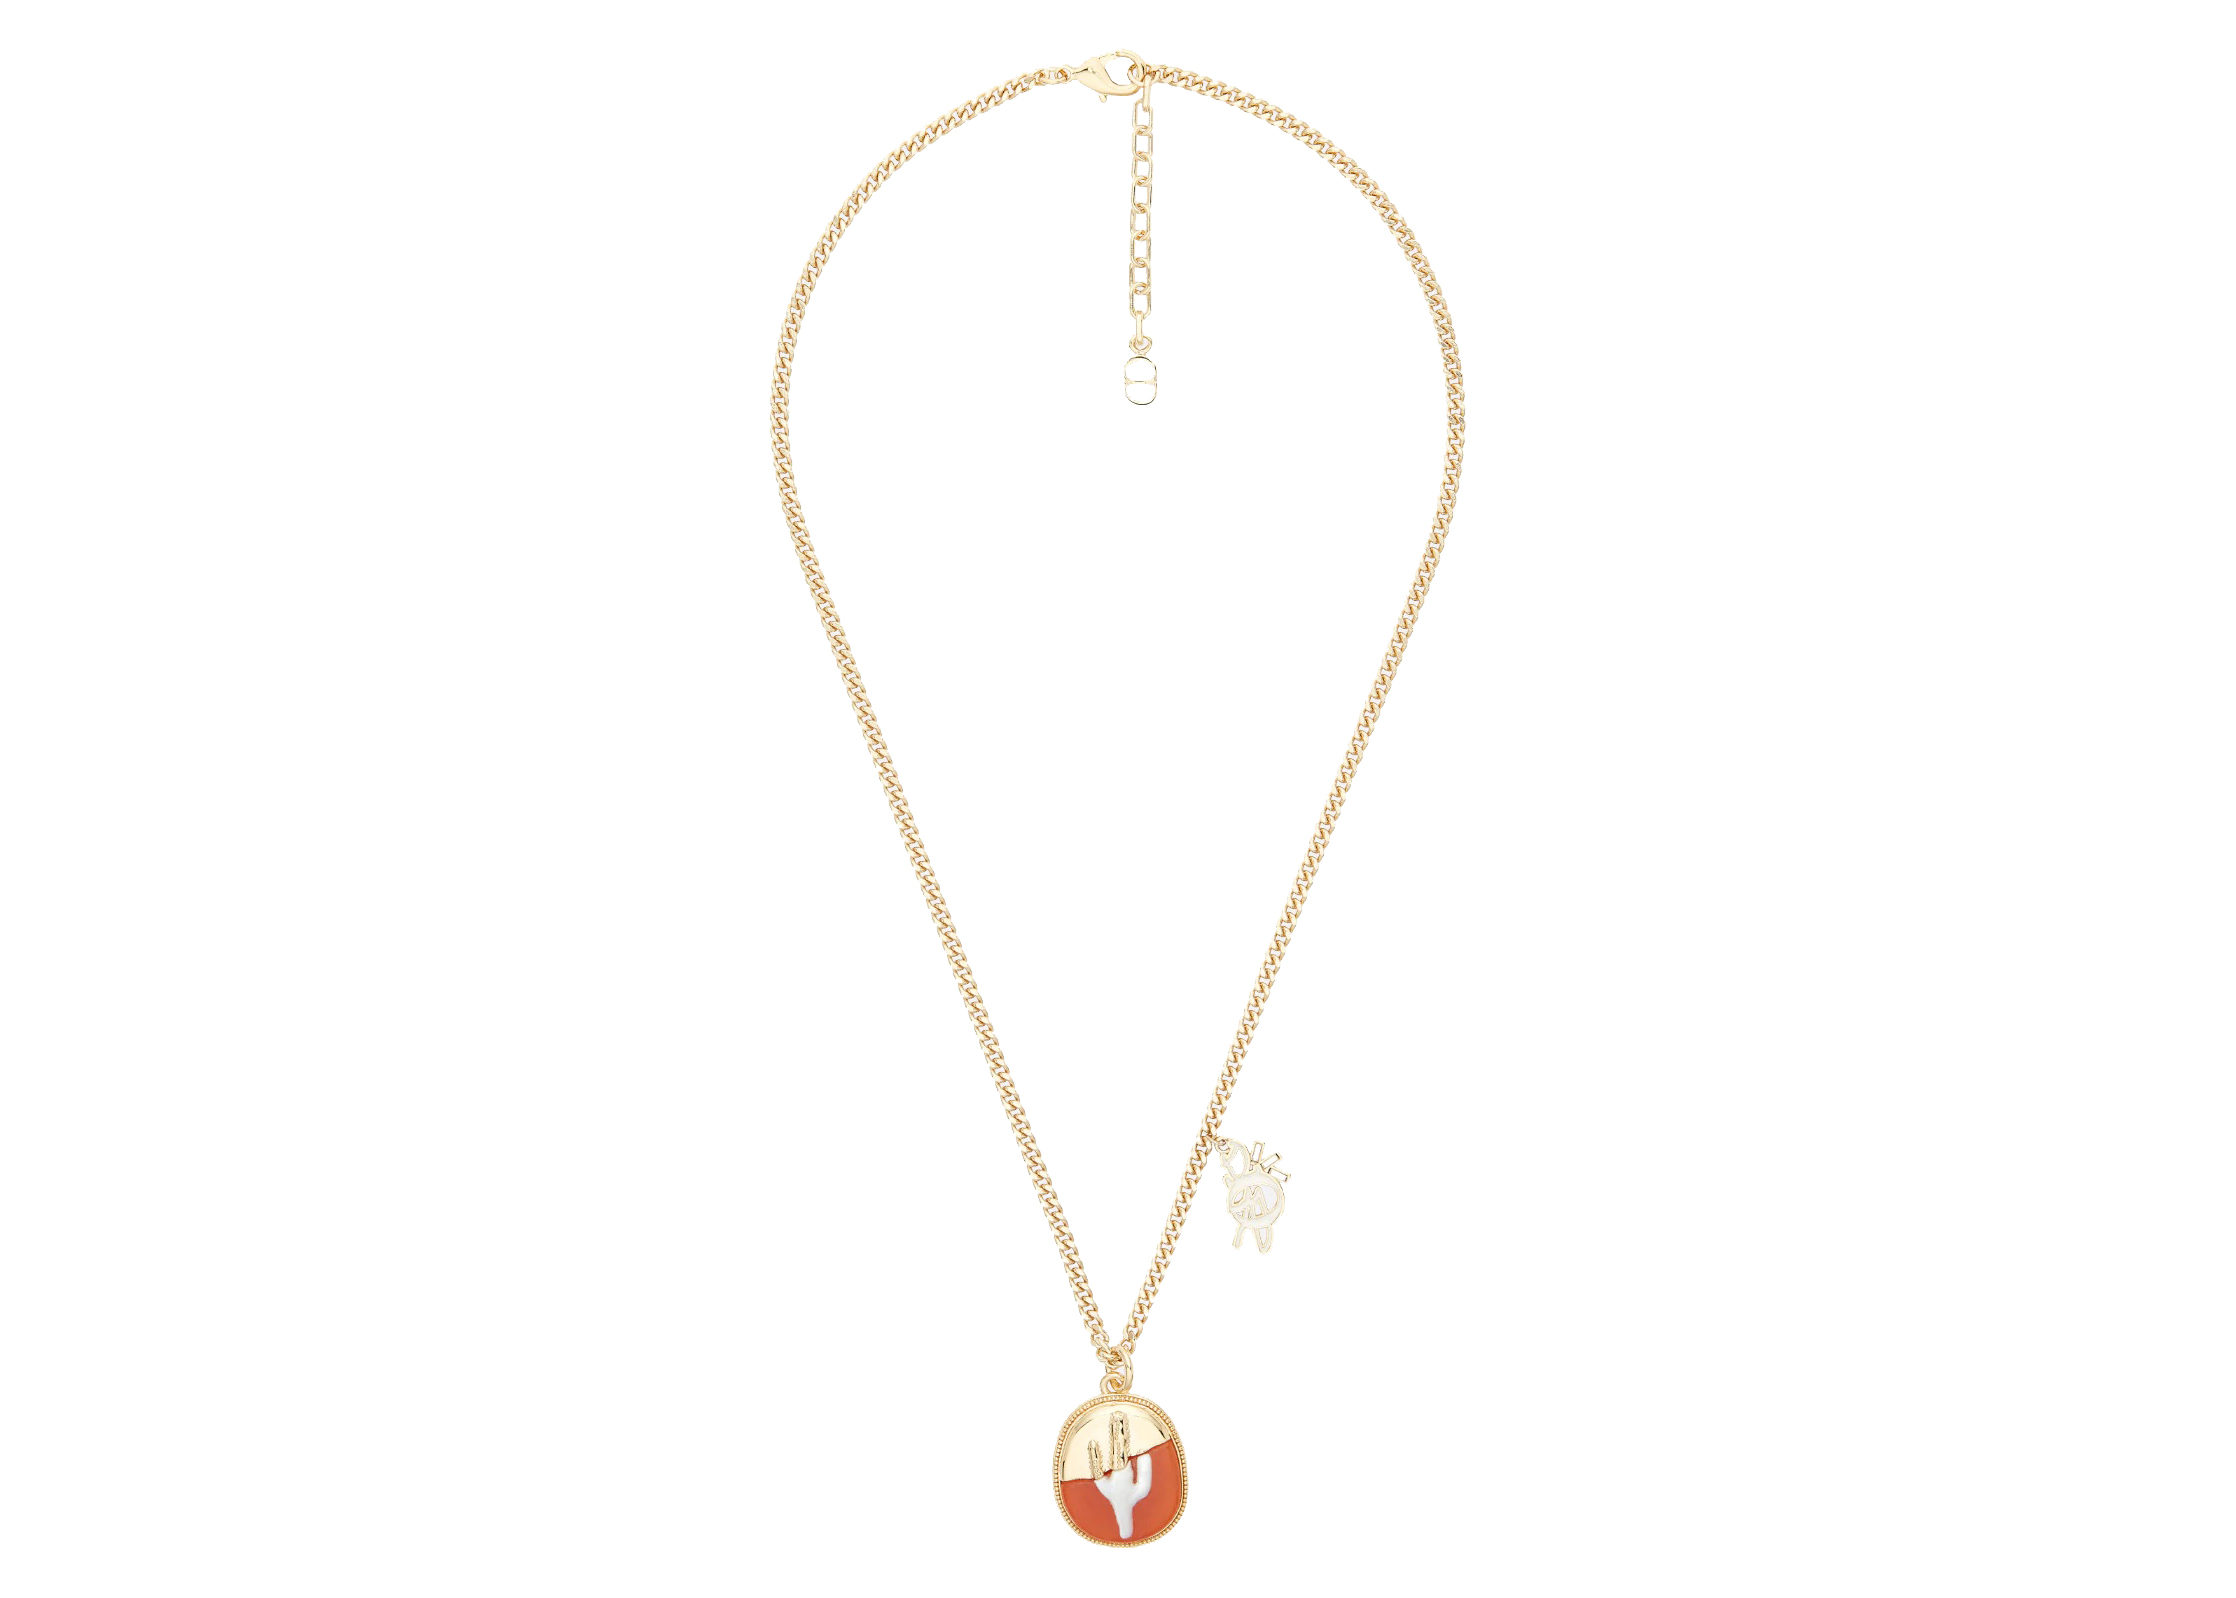 Dior x CACTUS JACK Pearl Pendant Necklace Gold/Orange in Gold